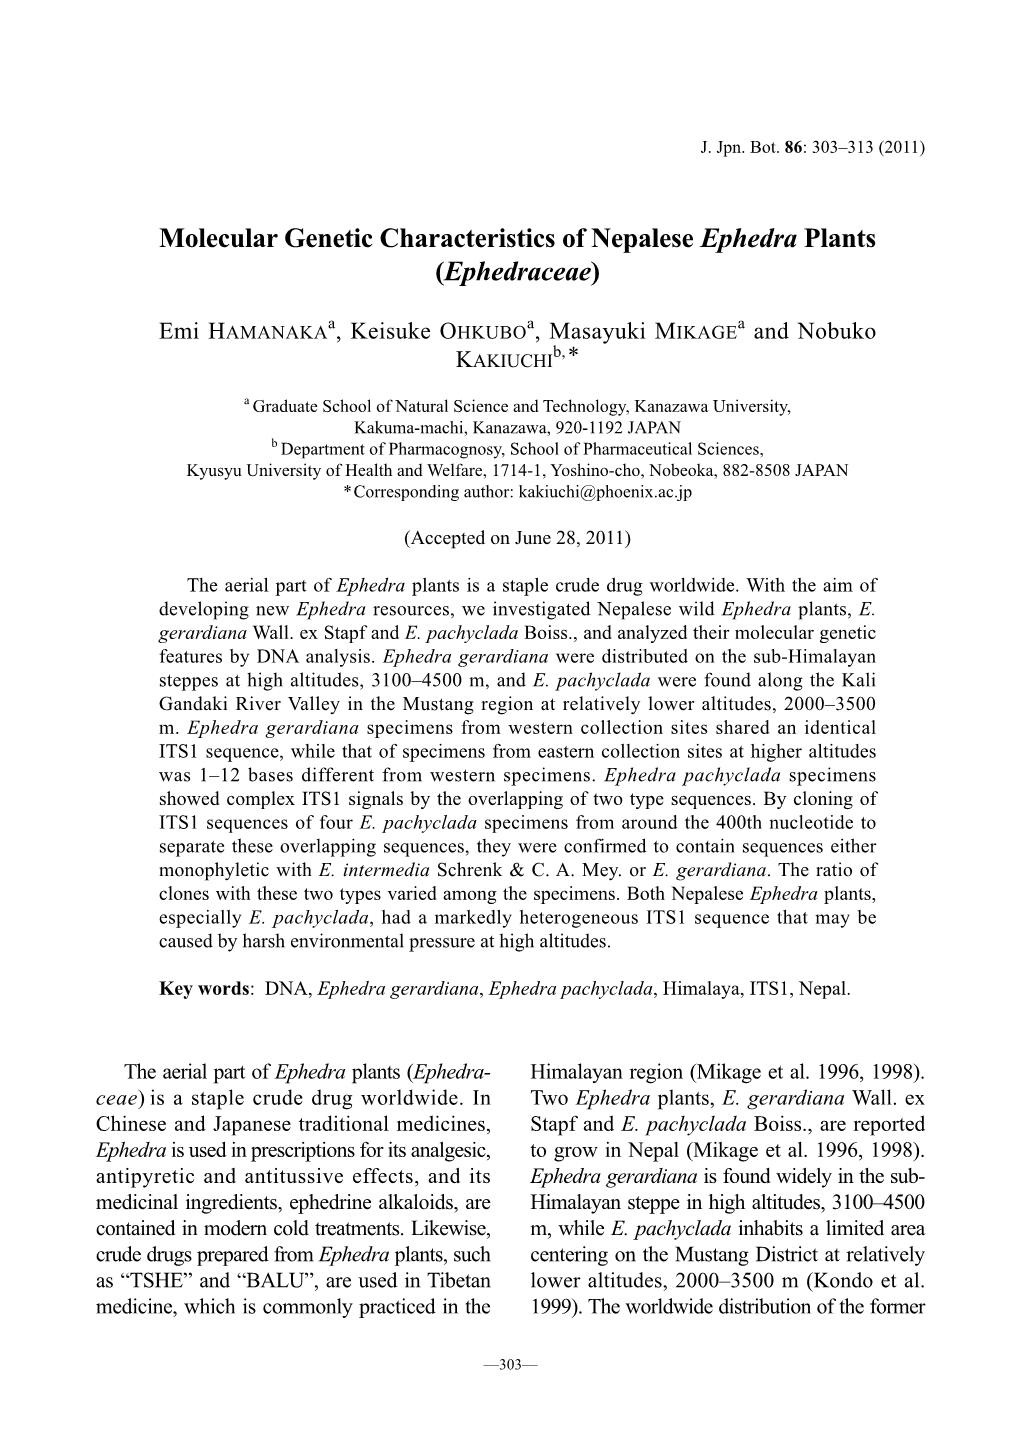 Molecular Genetic Characteristics of Nepalese Ephedra Plants (Ephedraceae)